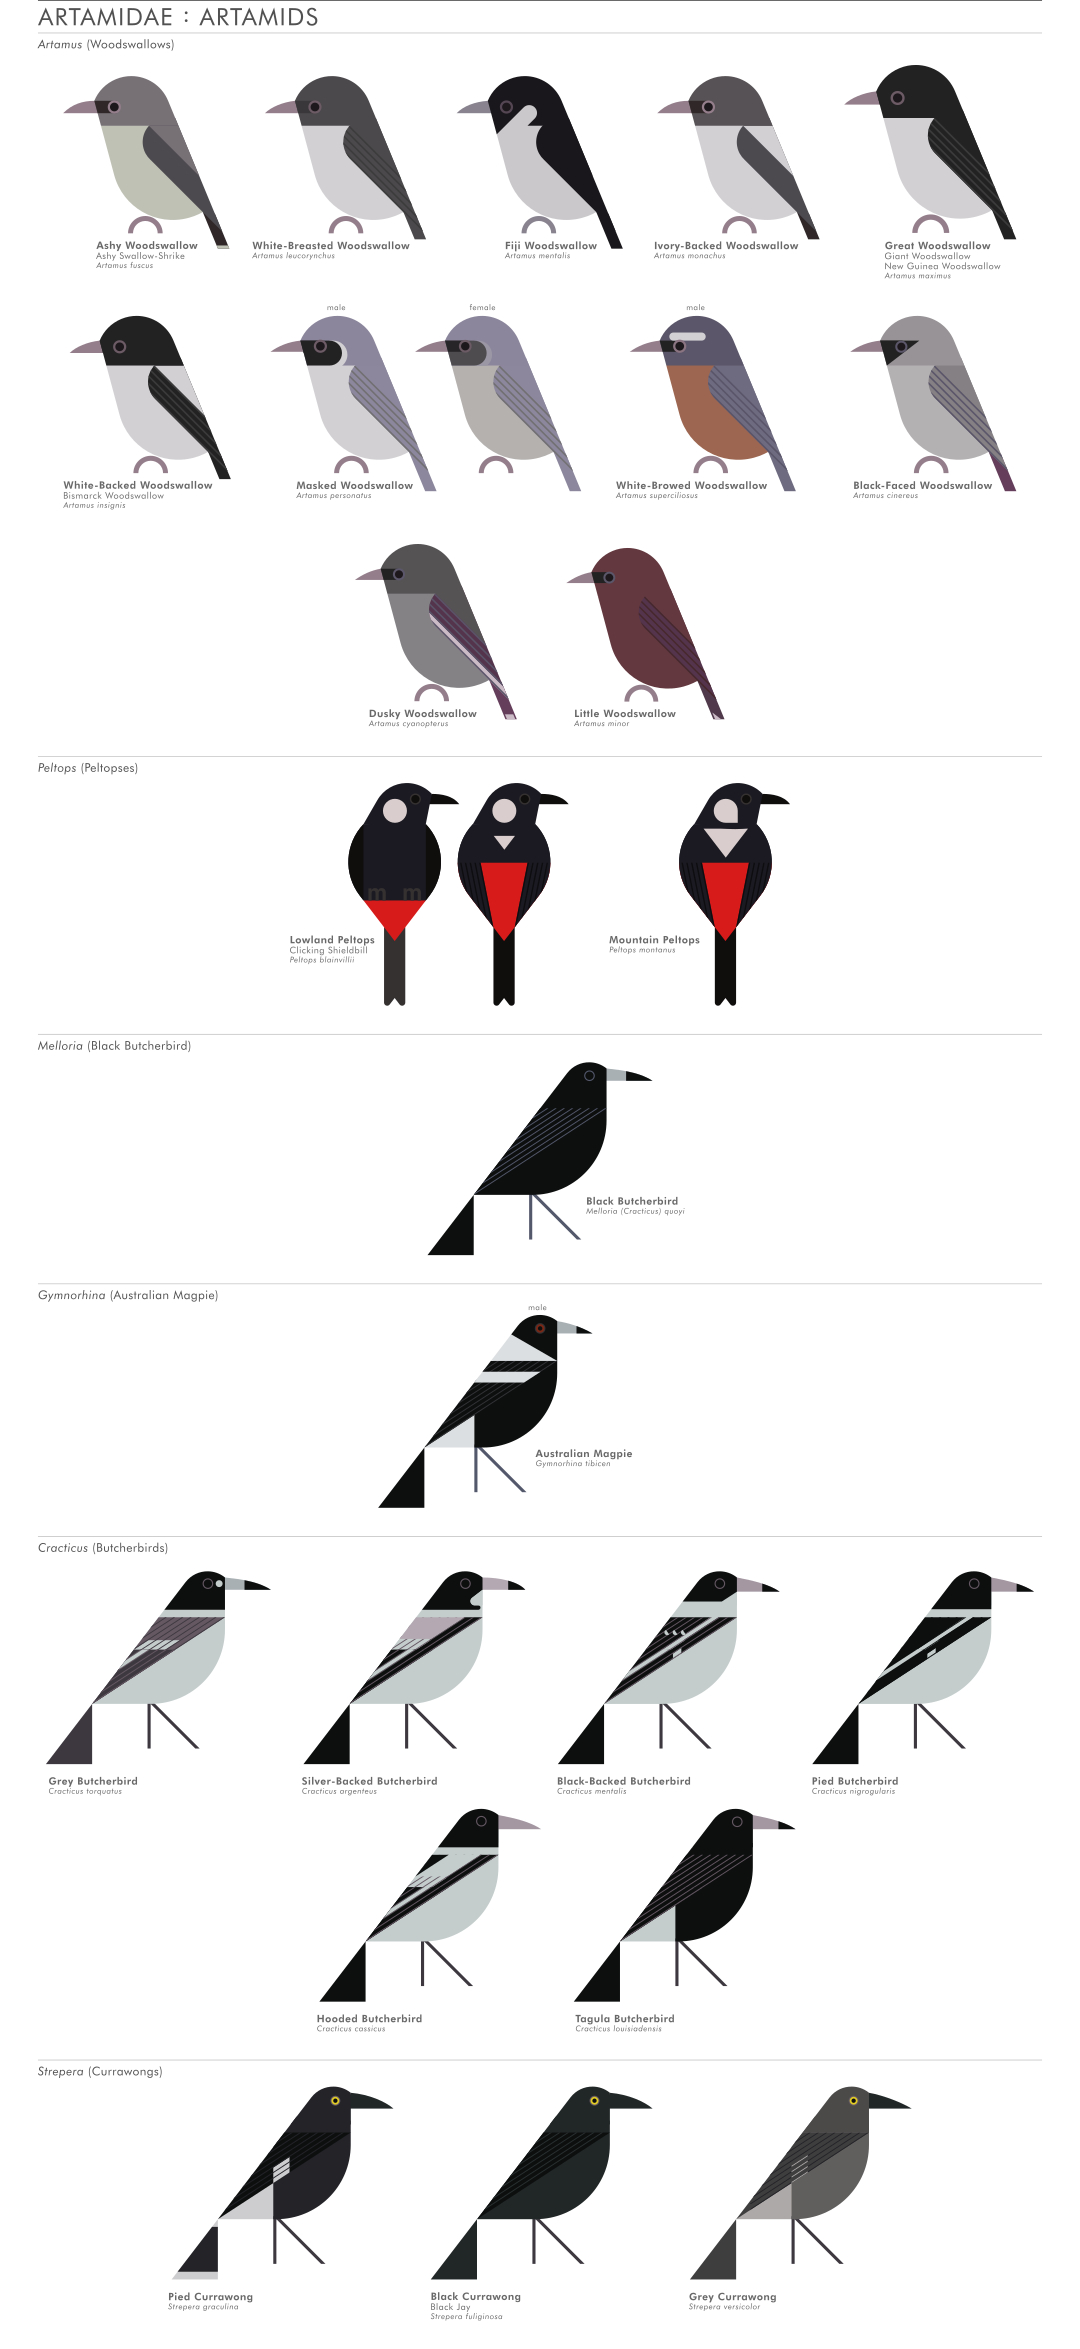 scott partridge - AVE - avian vector encyclopedia - artamids - bird vector art